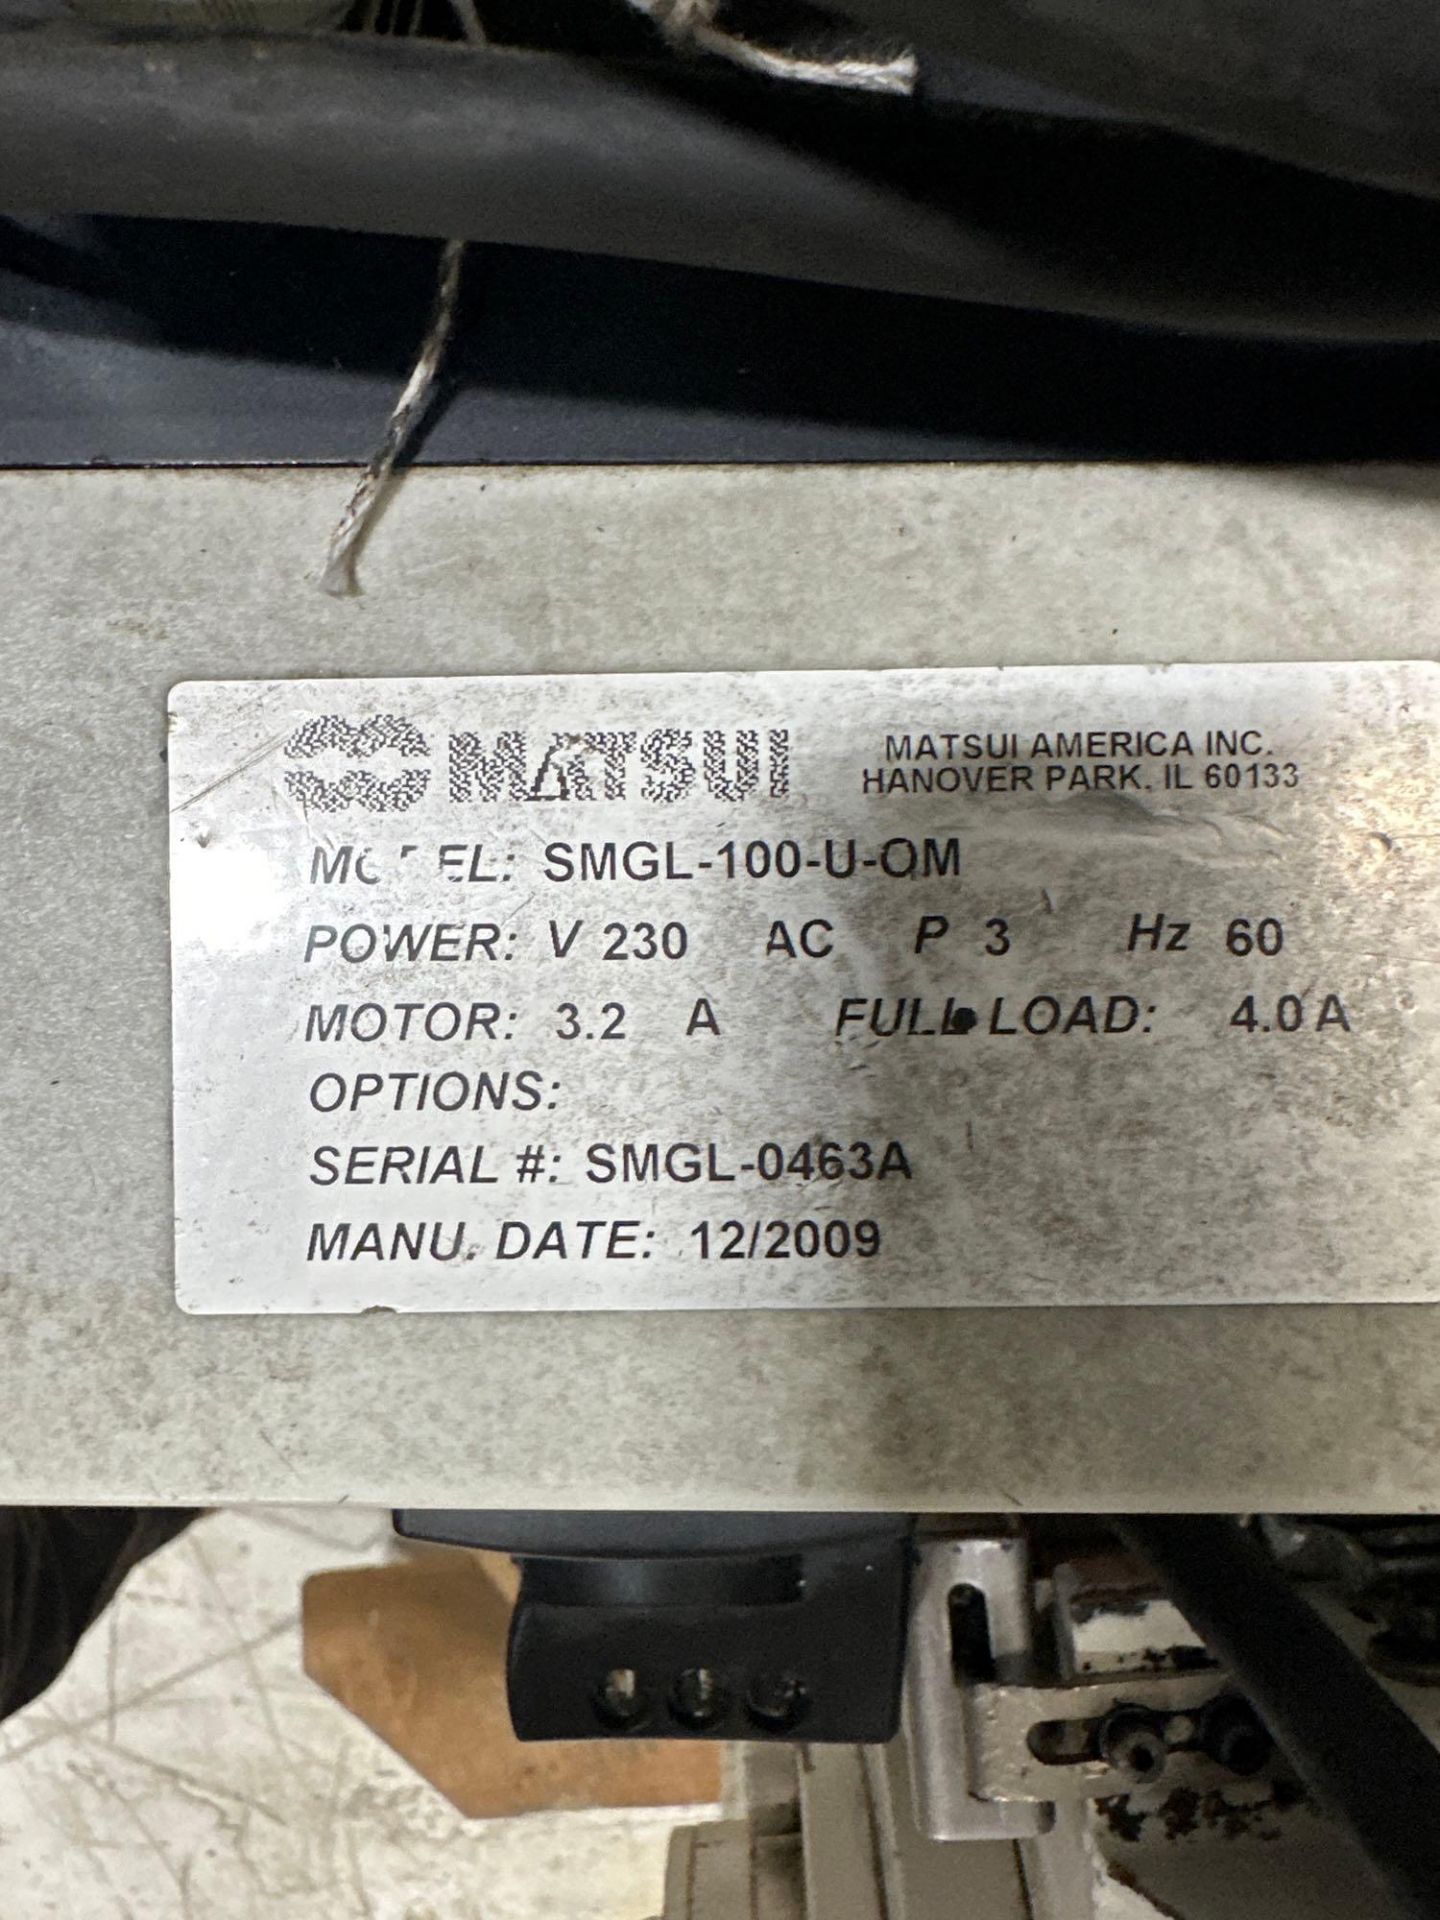 Matsui SMGL-100-U-OM Granulator, 230V, Feed throat size: 8" x 10" - Image 5 of 5